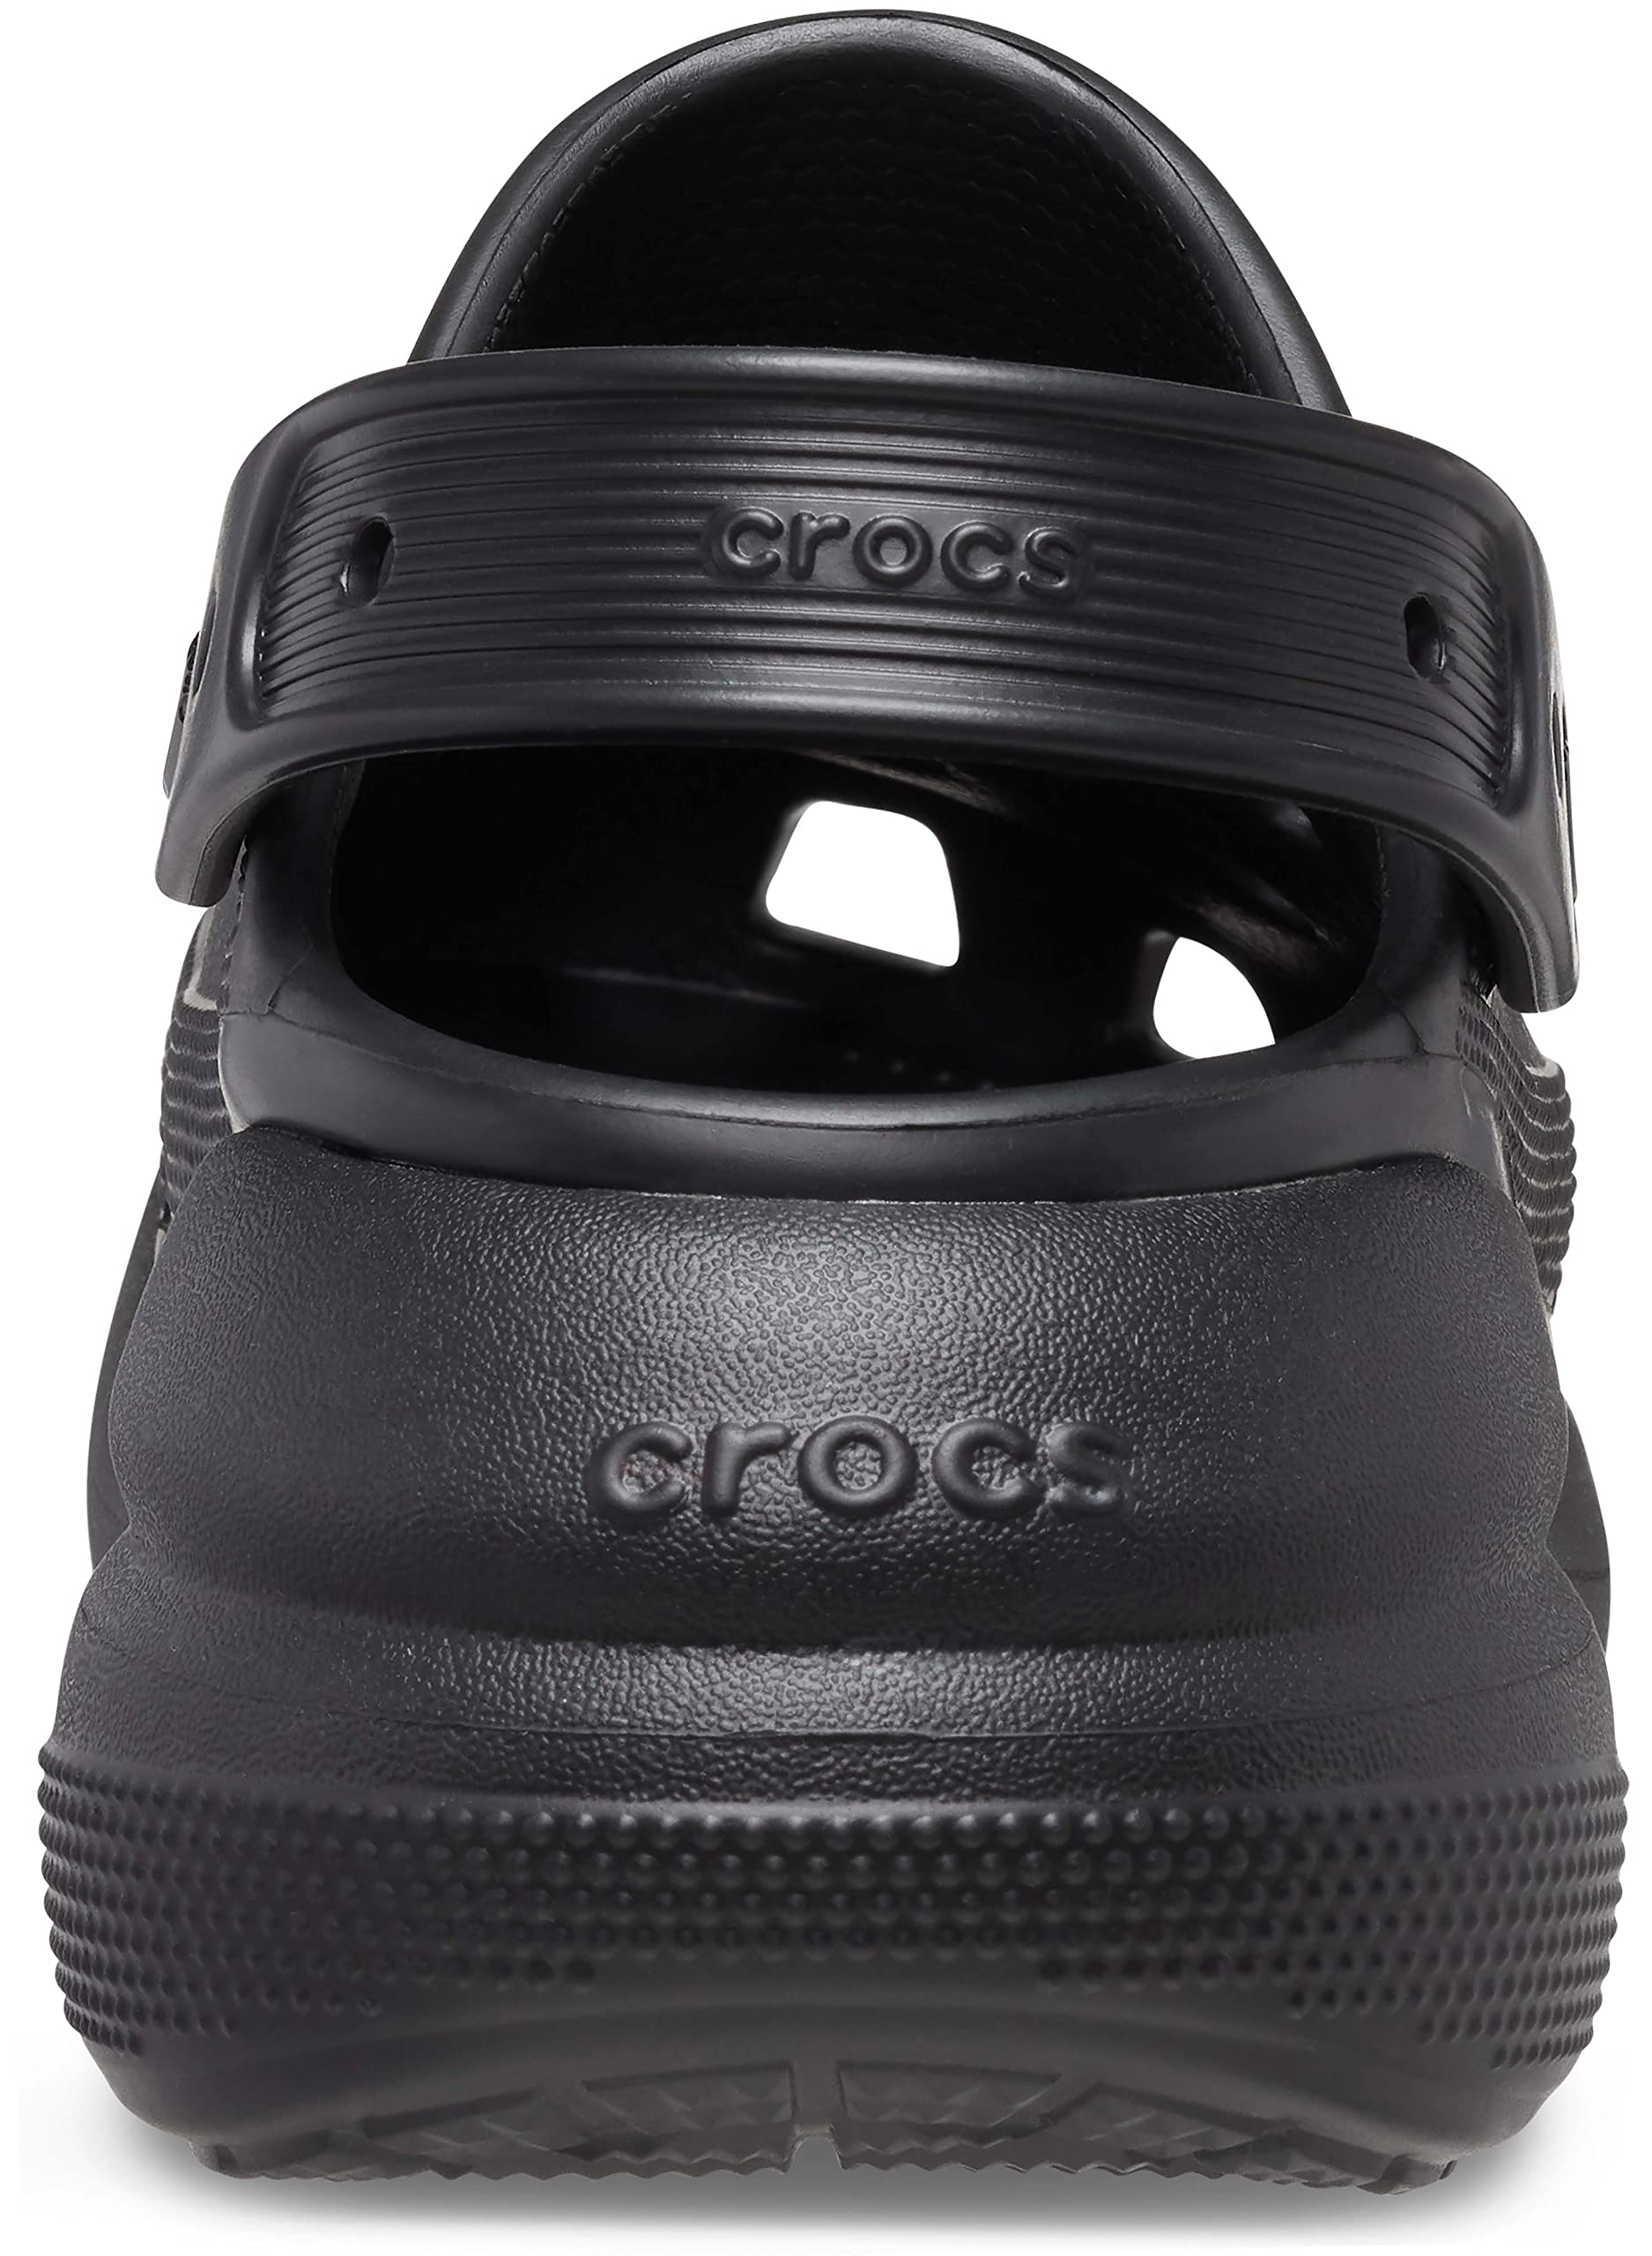 Crocs Unisex-Adult Crush Clog